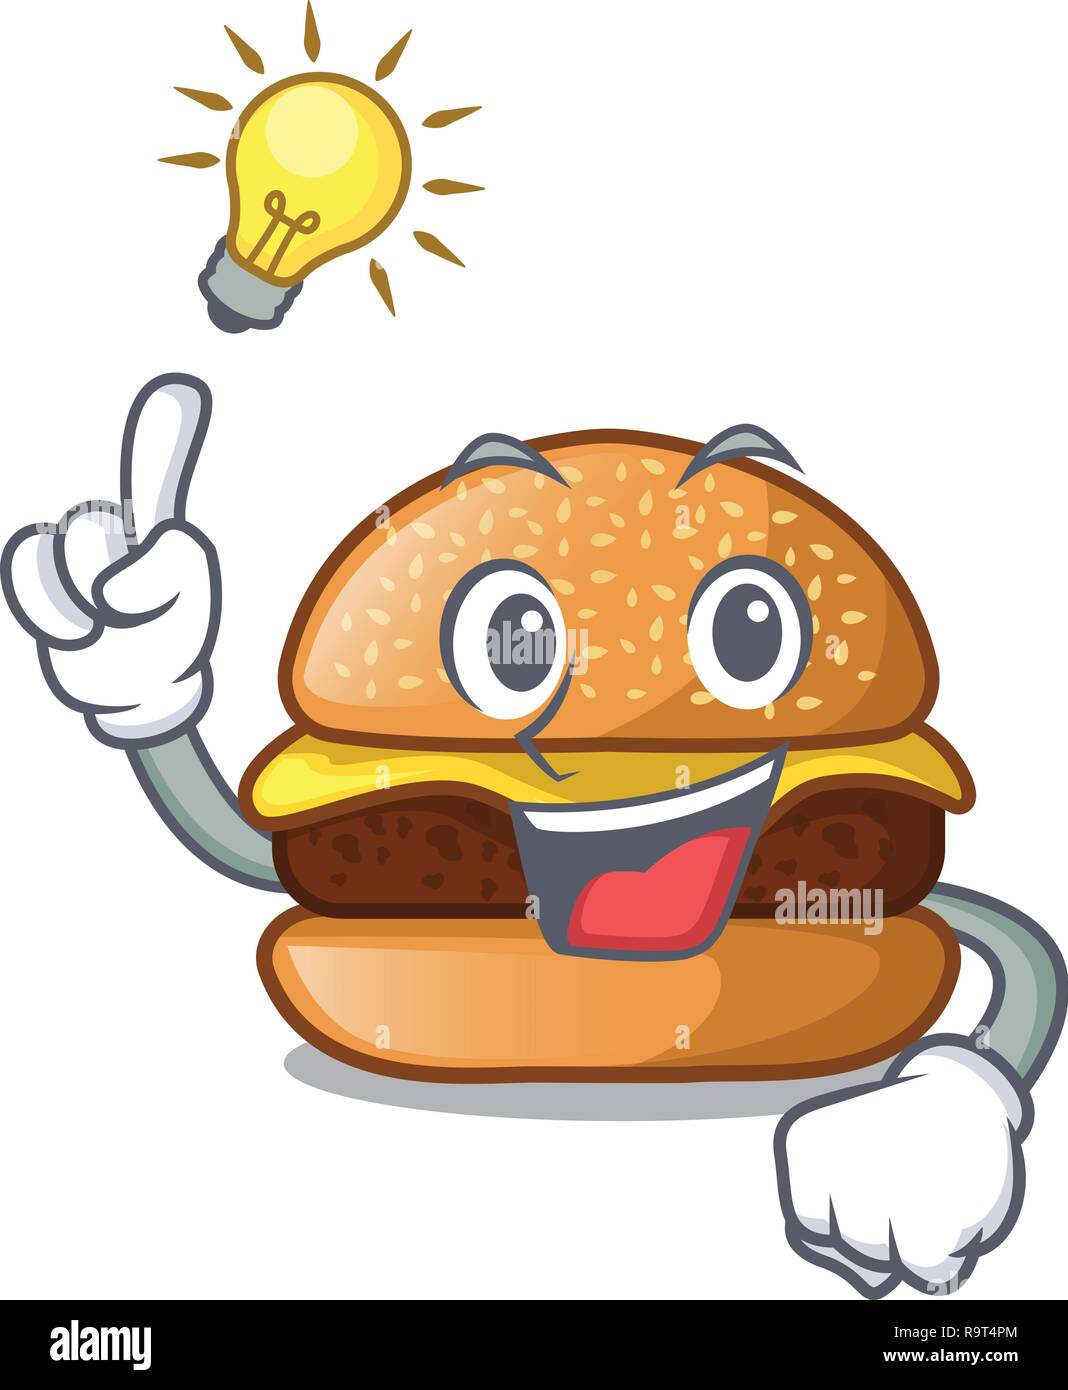 Avoir Une Idee Avec Le Hamburger Au Fromage Toping Cartoon Image Vectorielle Stock Alamy